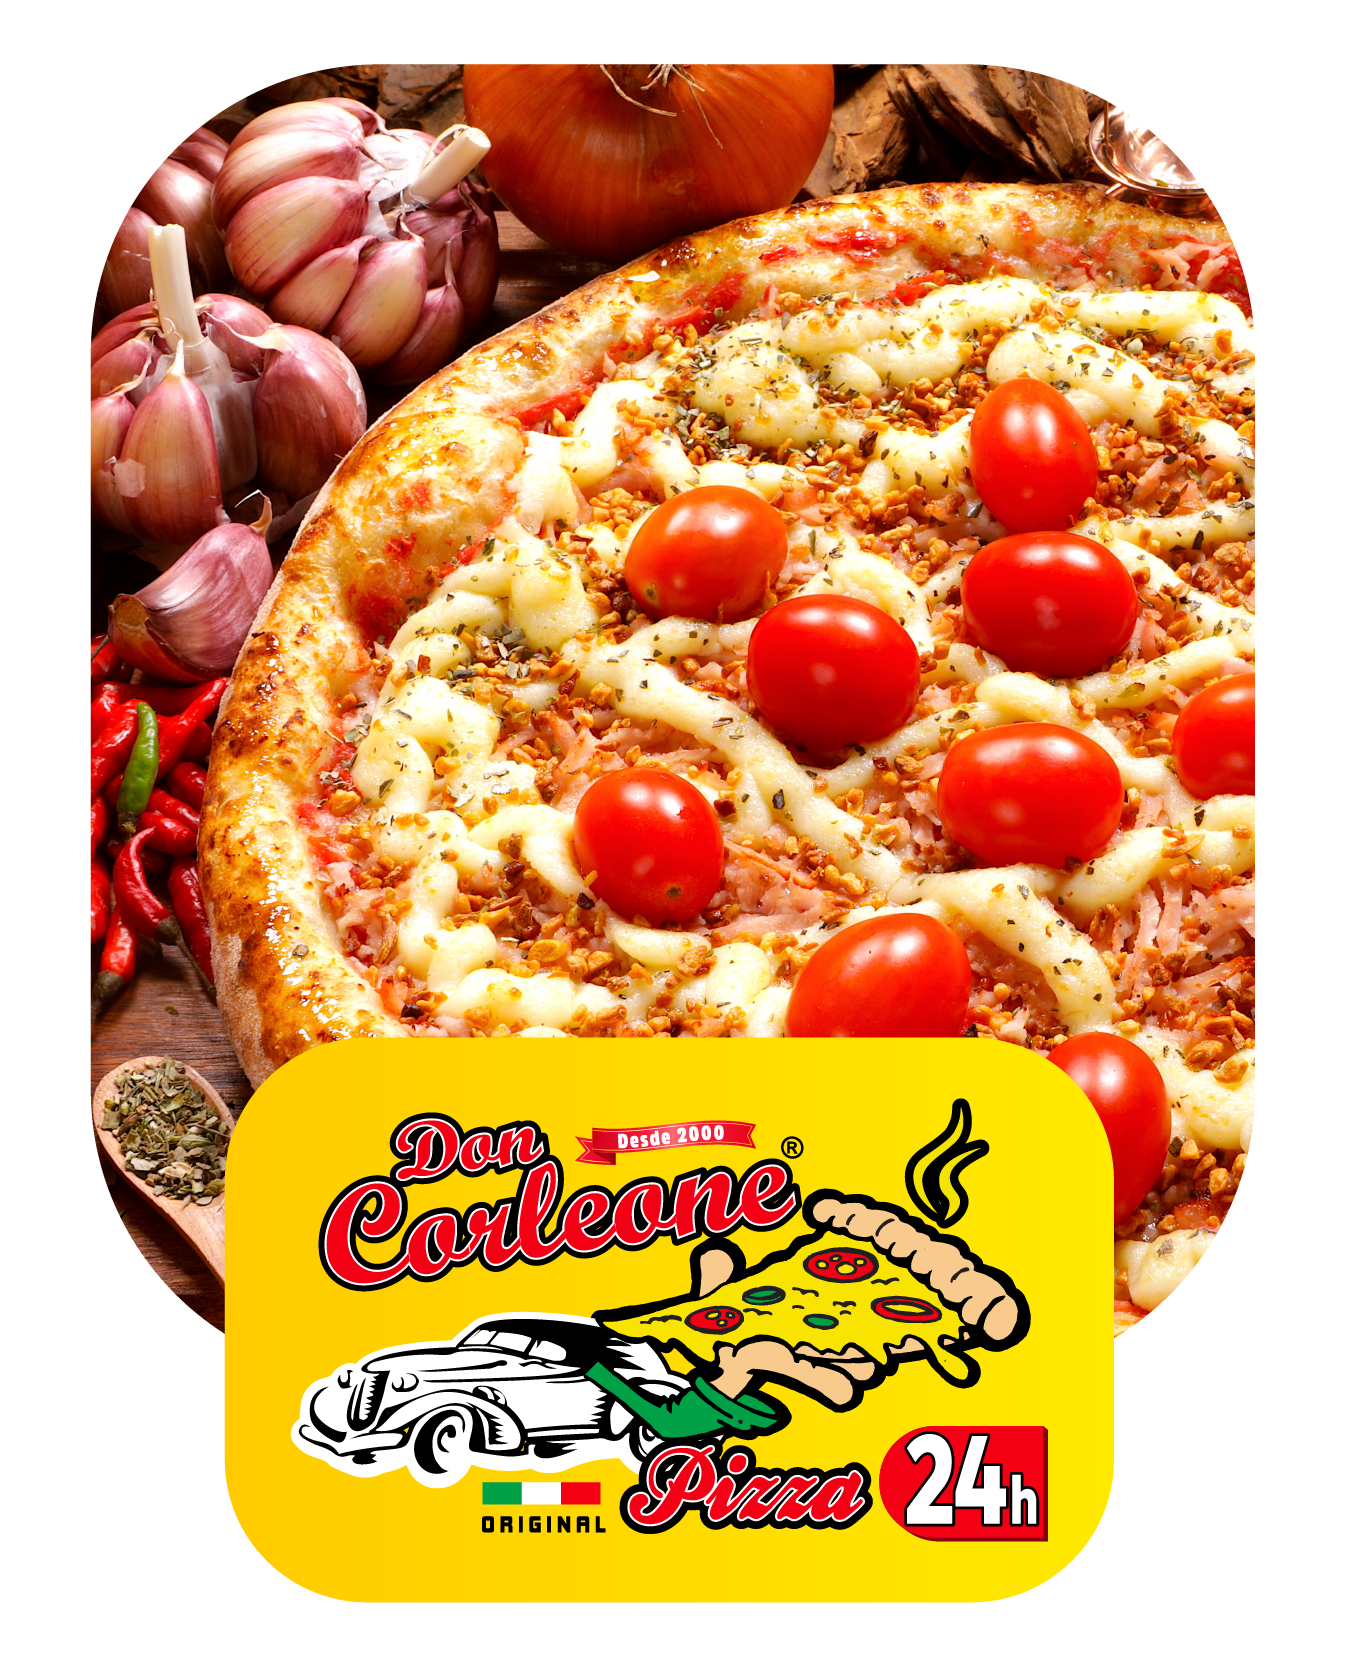 don corleone pizza chicken calzone burger salada_Prancheta 1-01